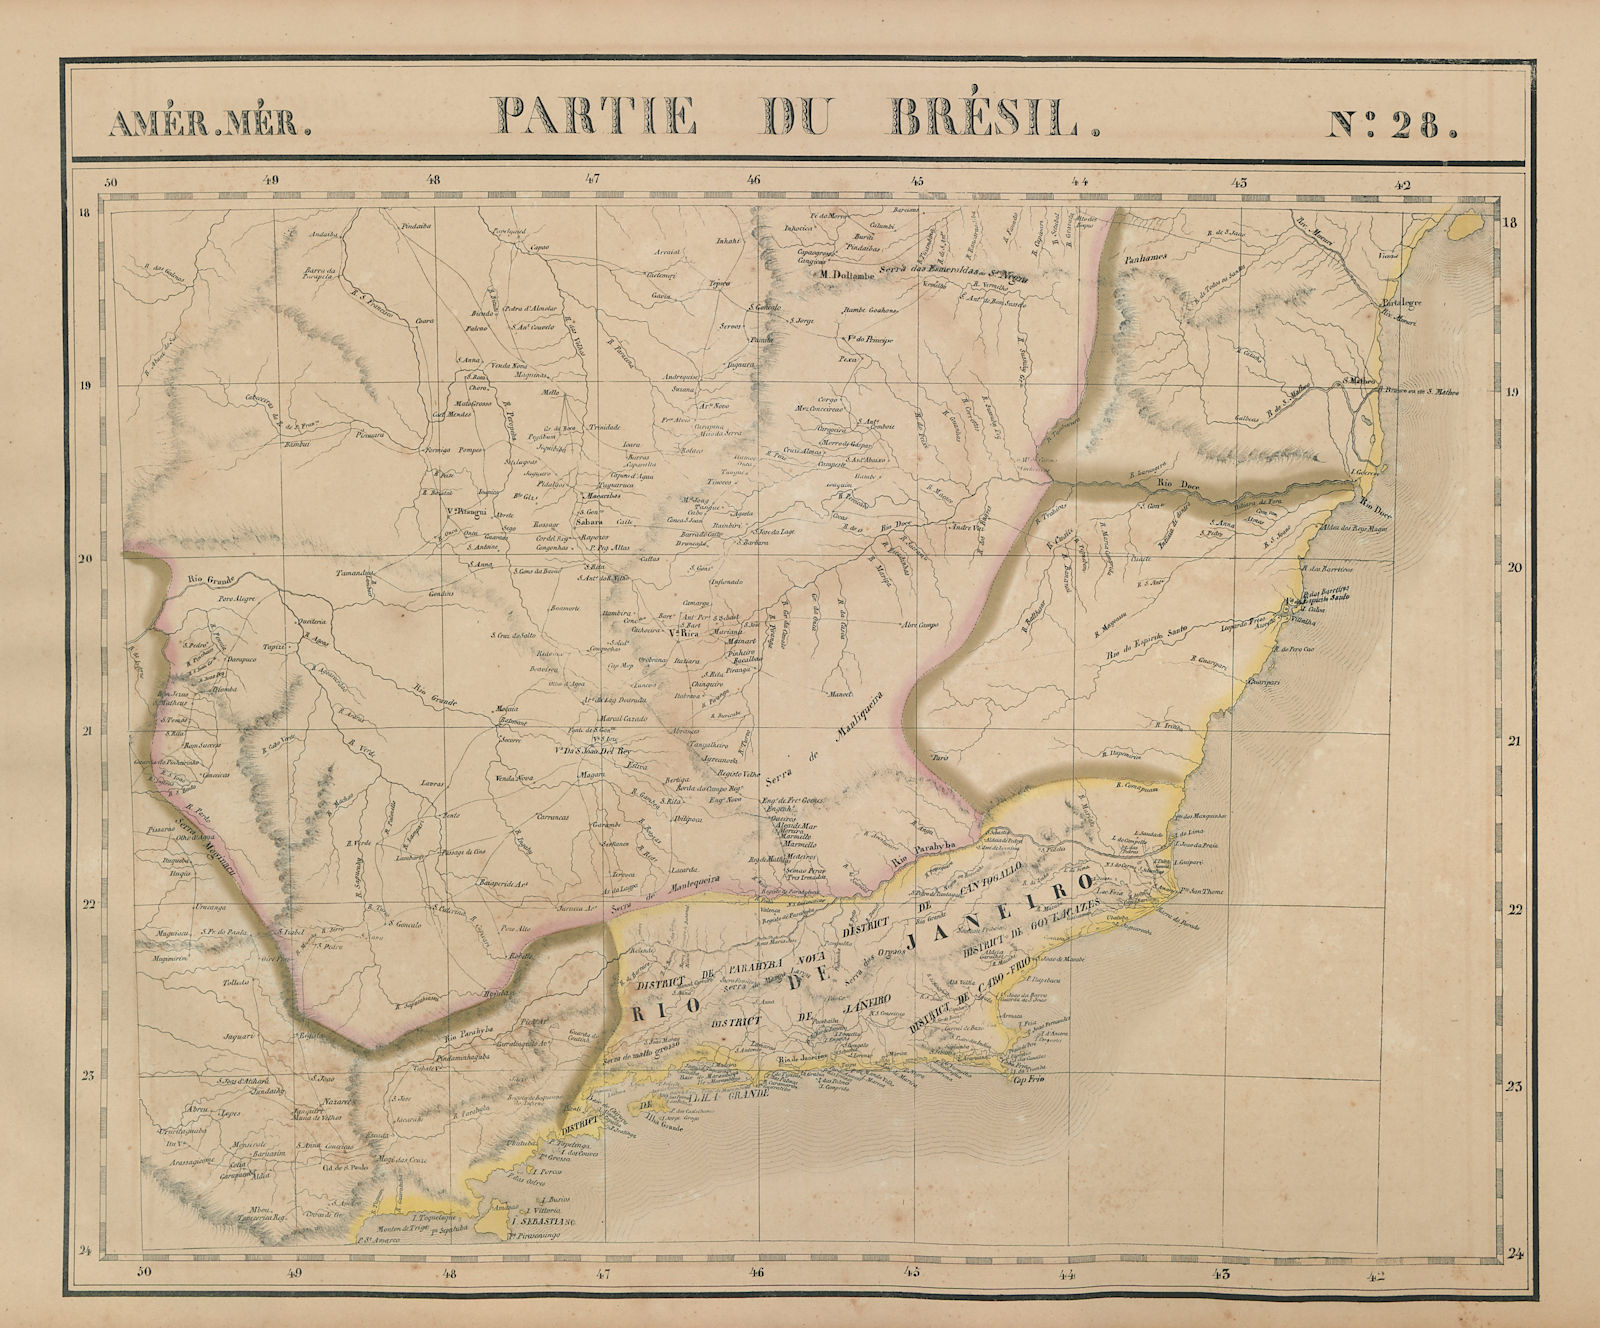 Amér Mér. Brésil 28 SE Brazil. MG Rio de Janeiro SP ES VANDERMAELEN 1827 map